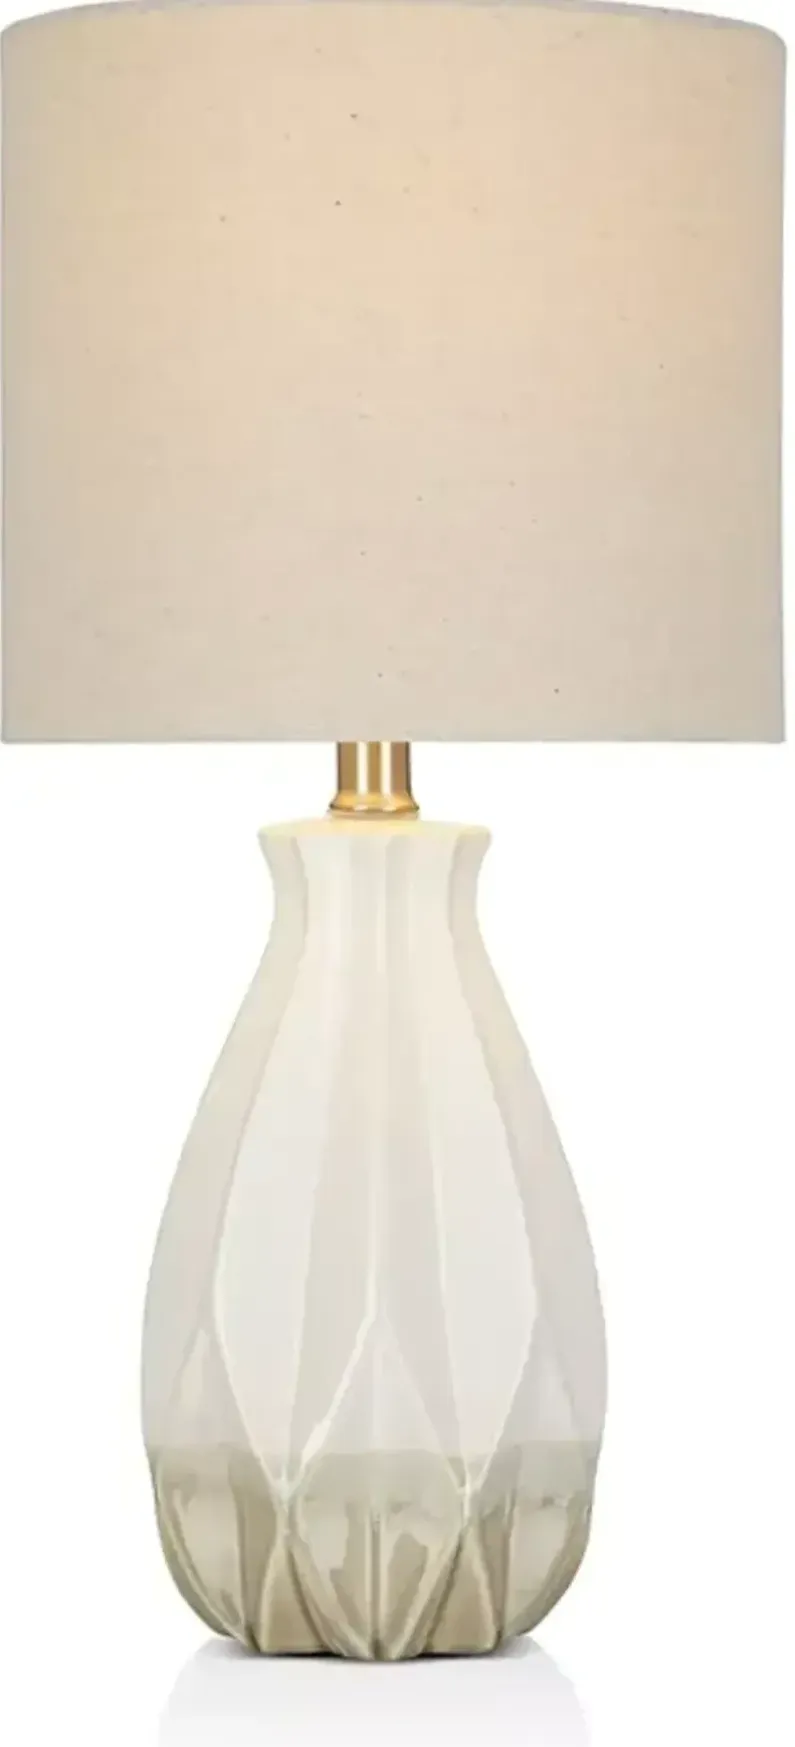 Cresswell 19" White Ceramic Accent Lamp 